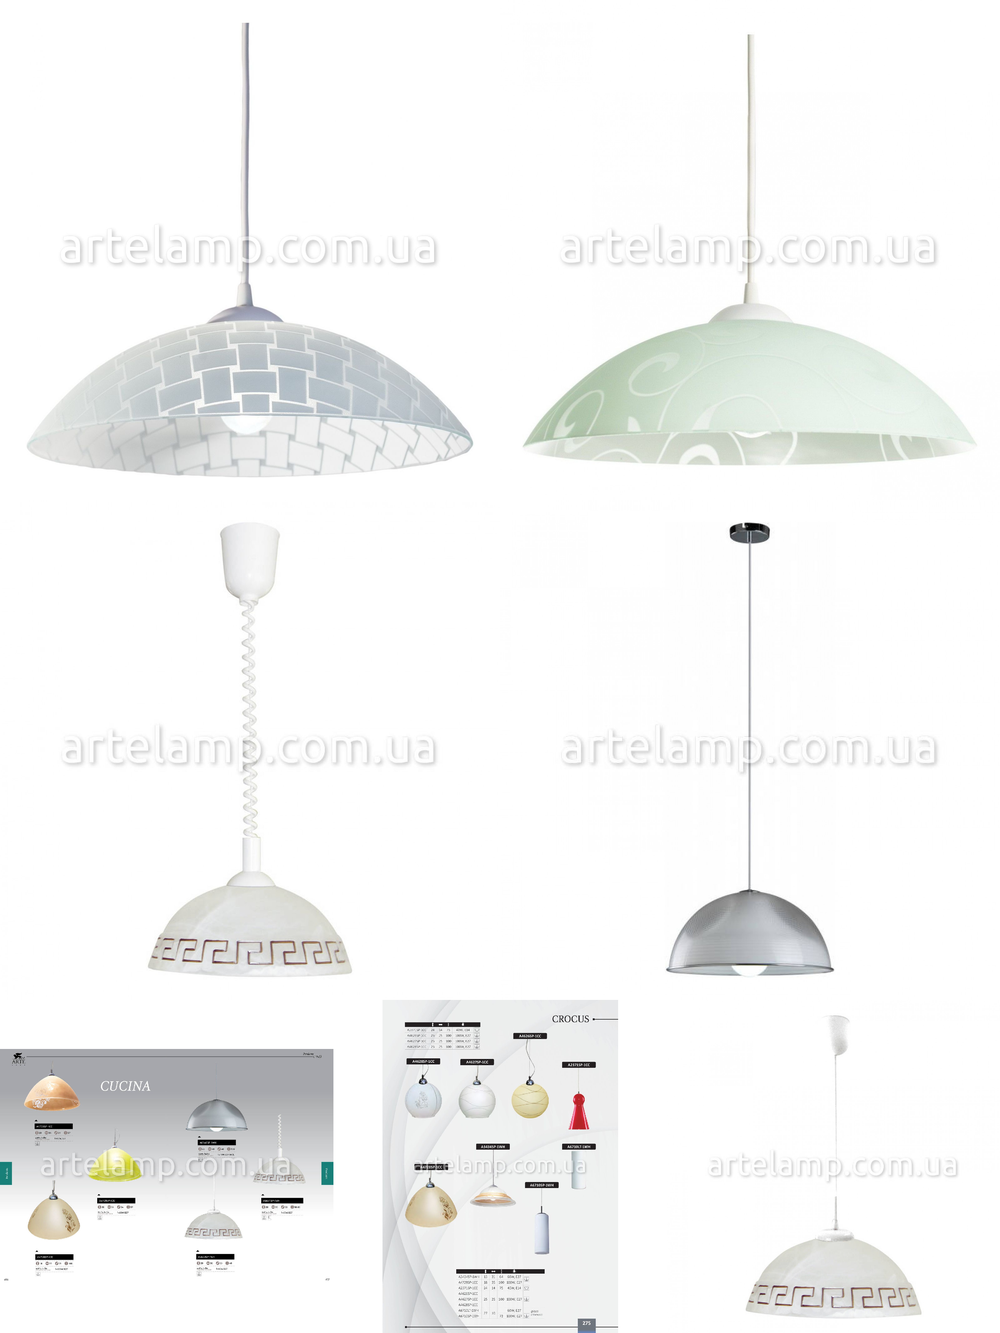 « для кухни». Arte Lamp серия Cucina артикул A6430SP-1WH